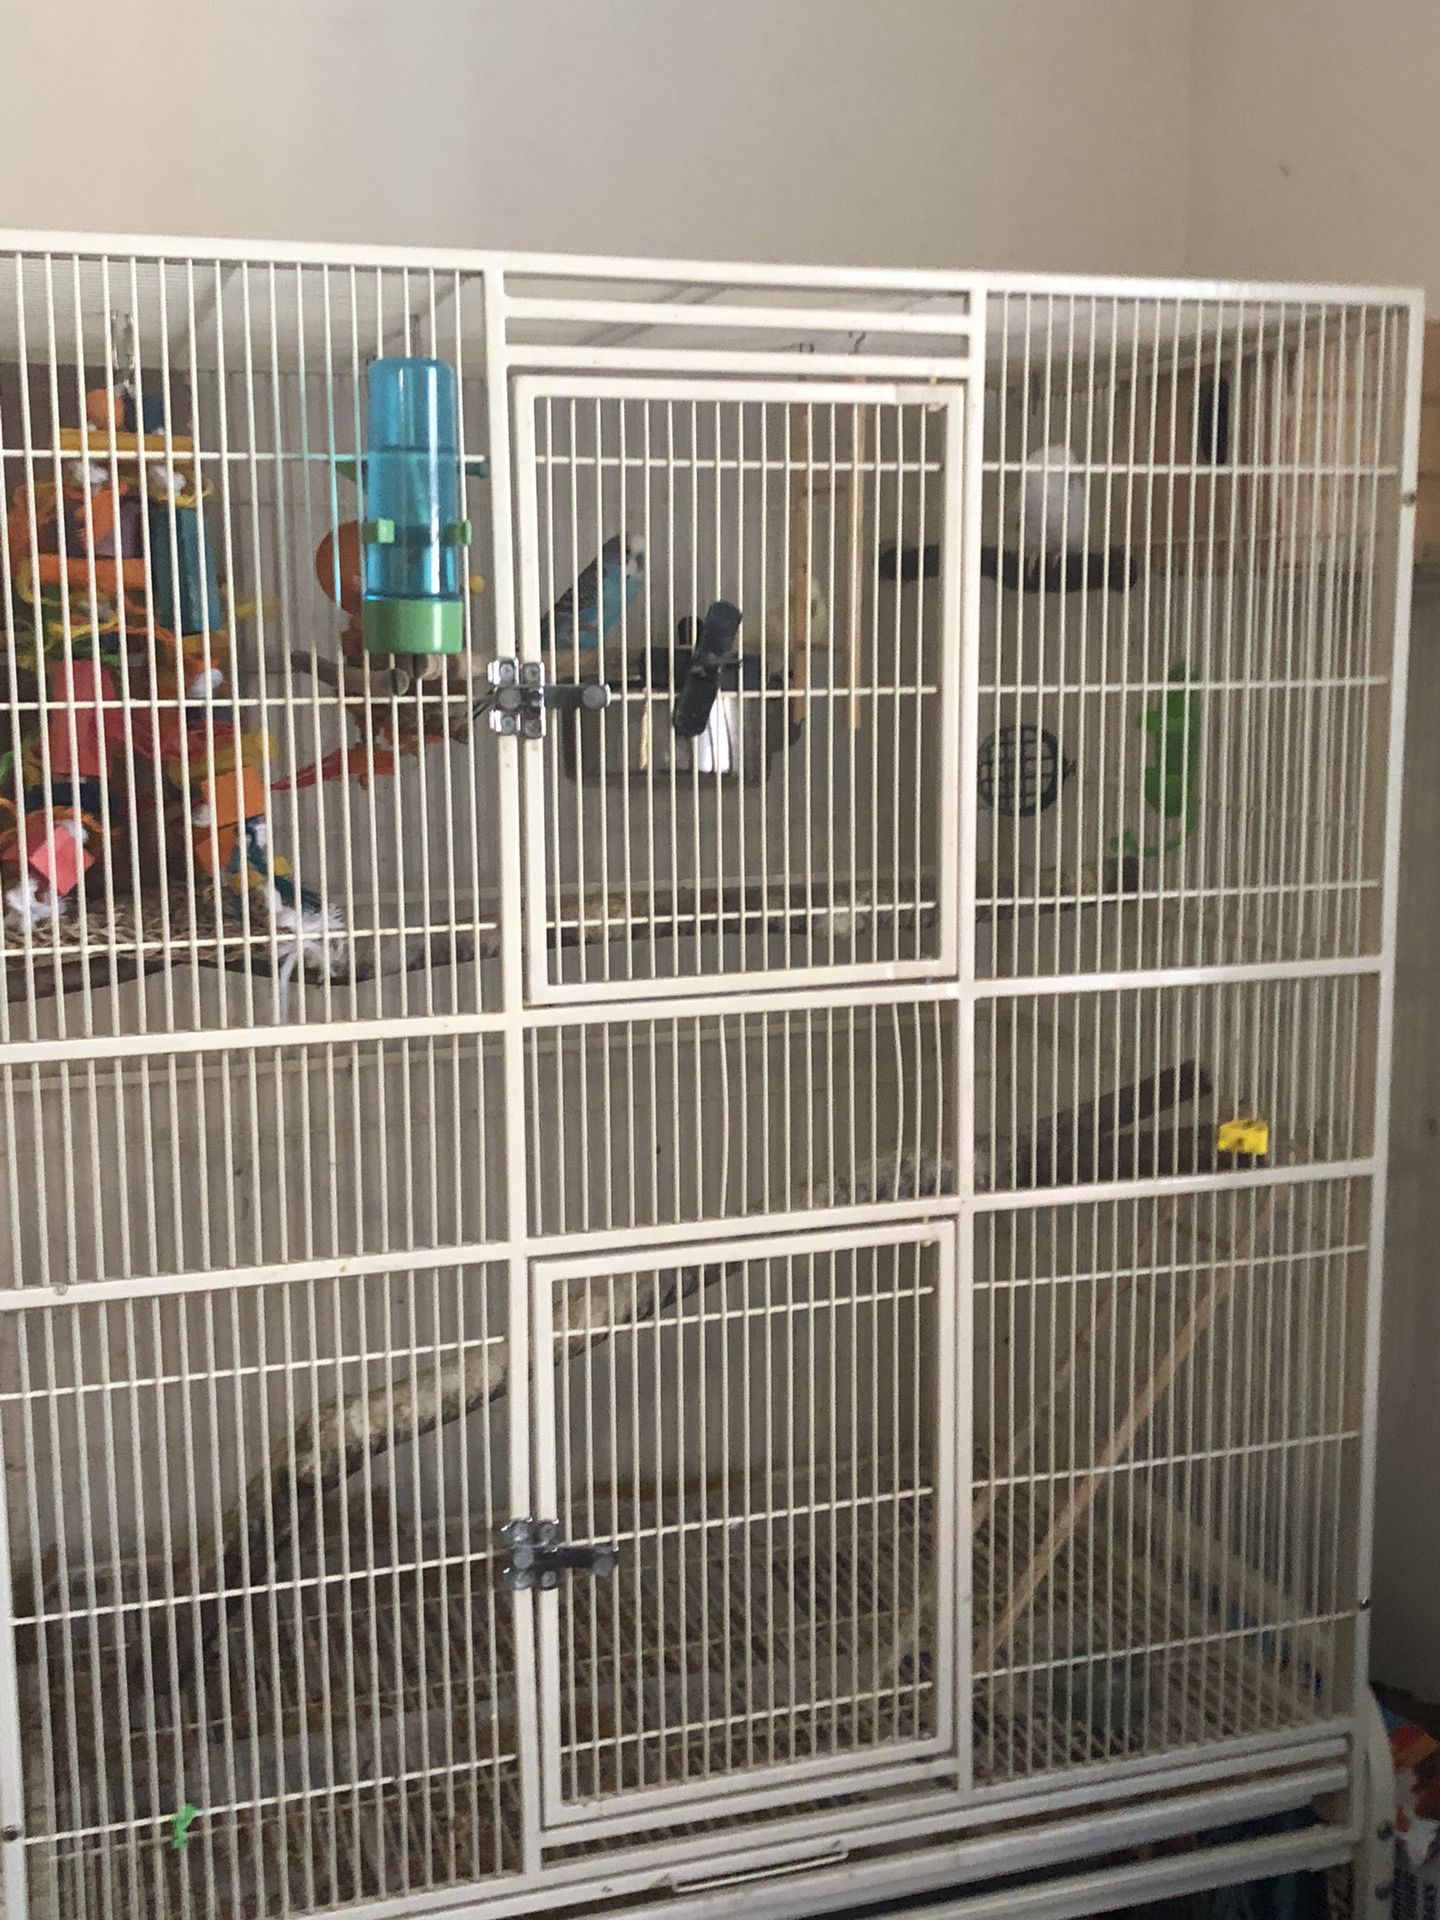 Bird Cage With 5 Birds